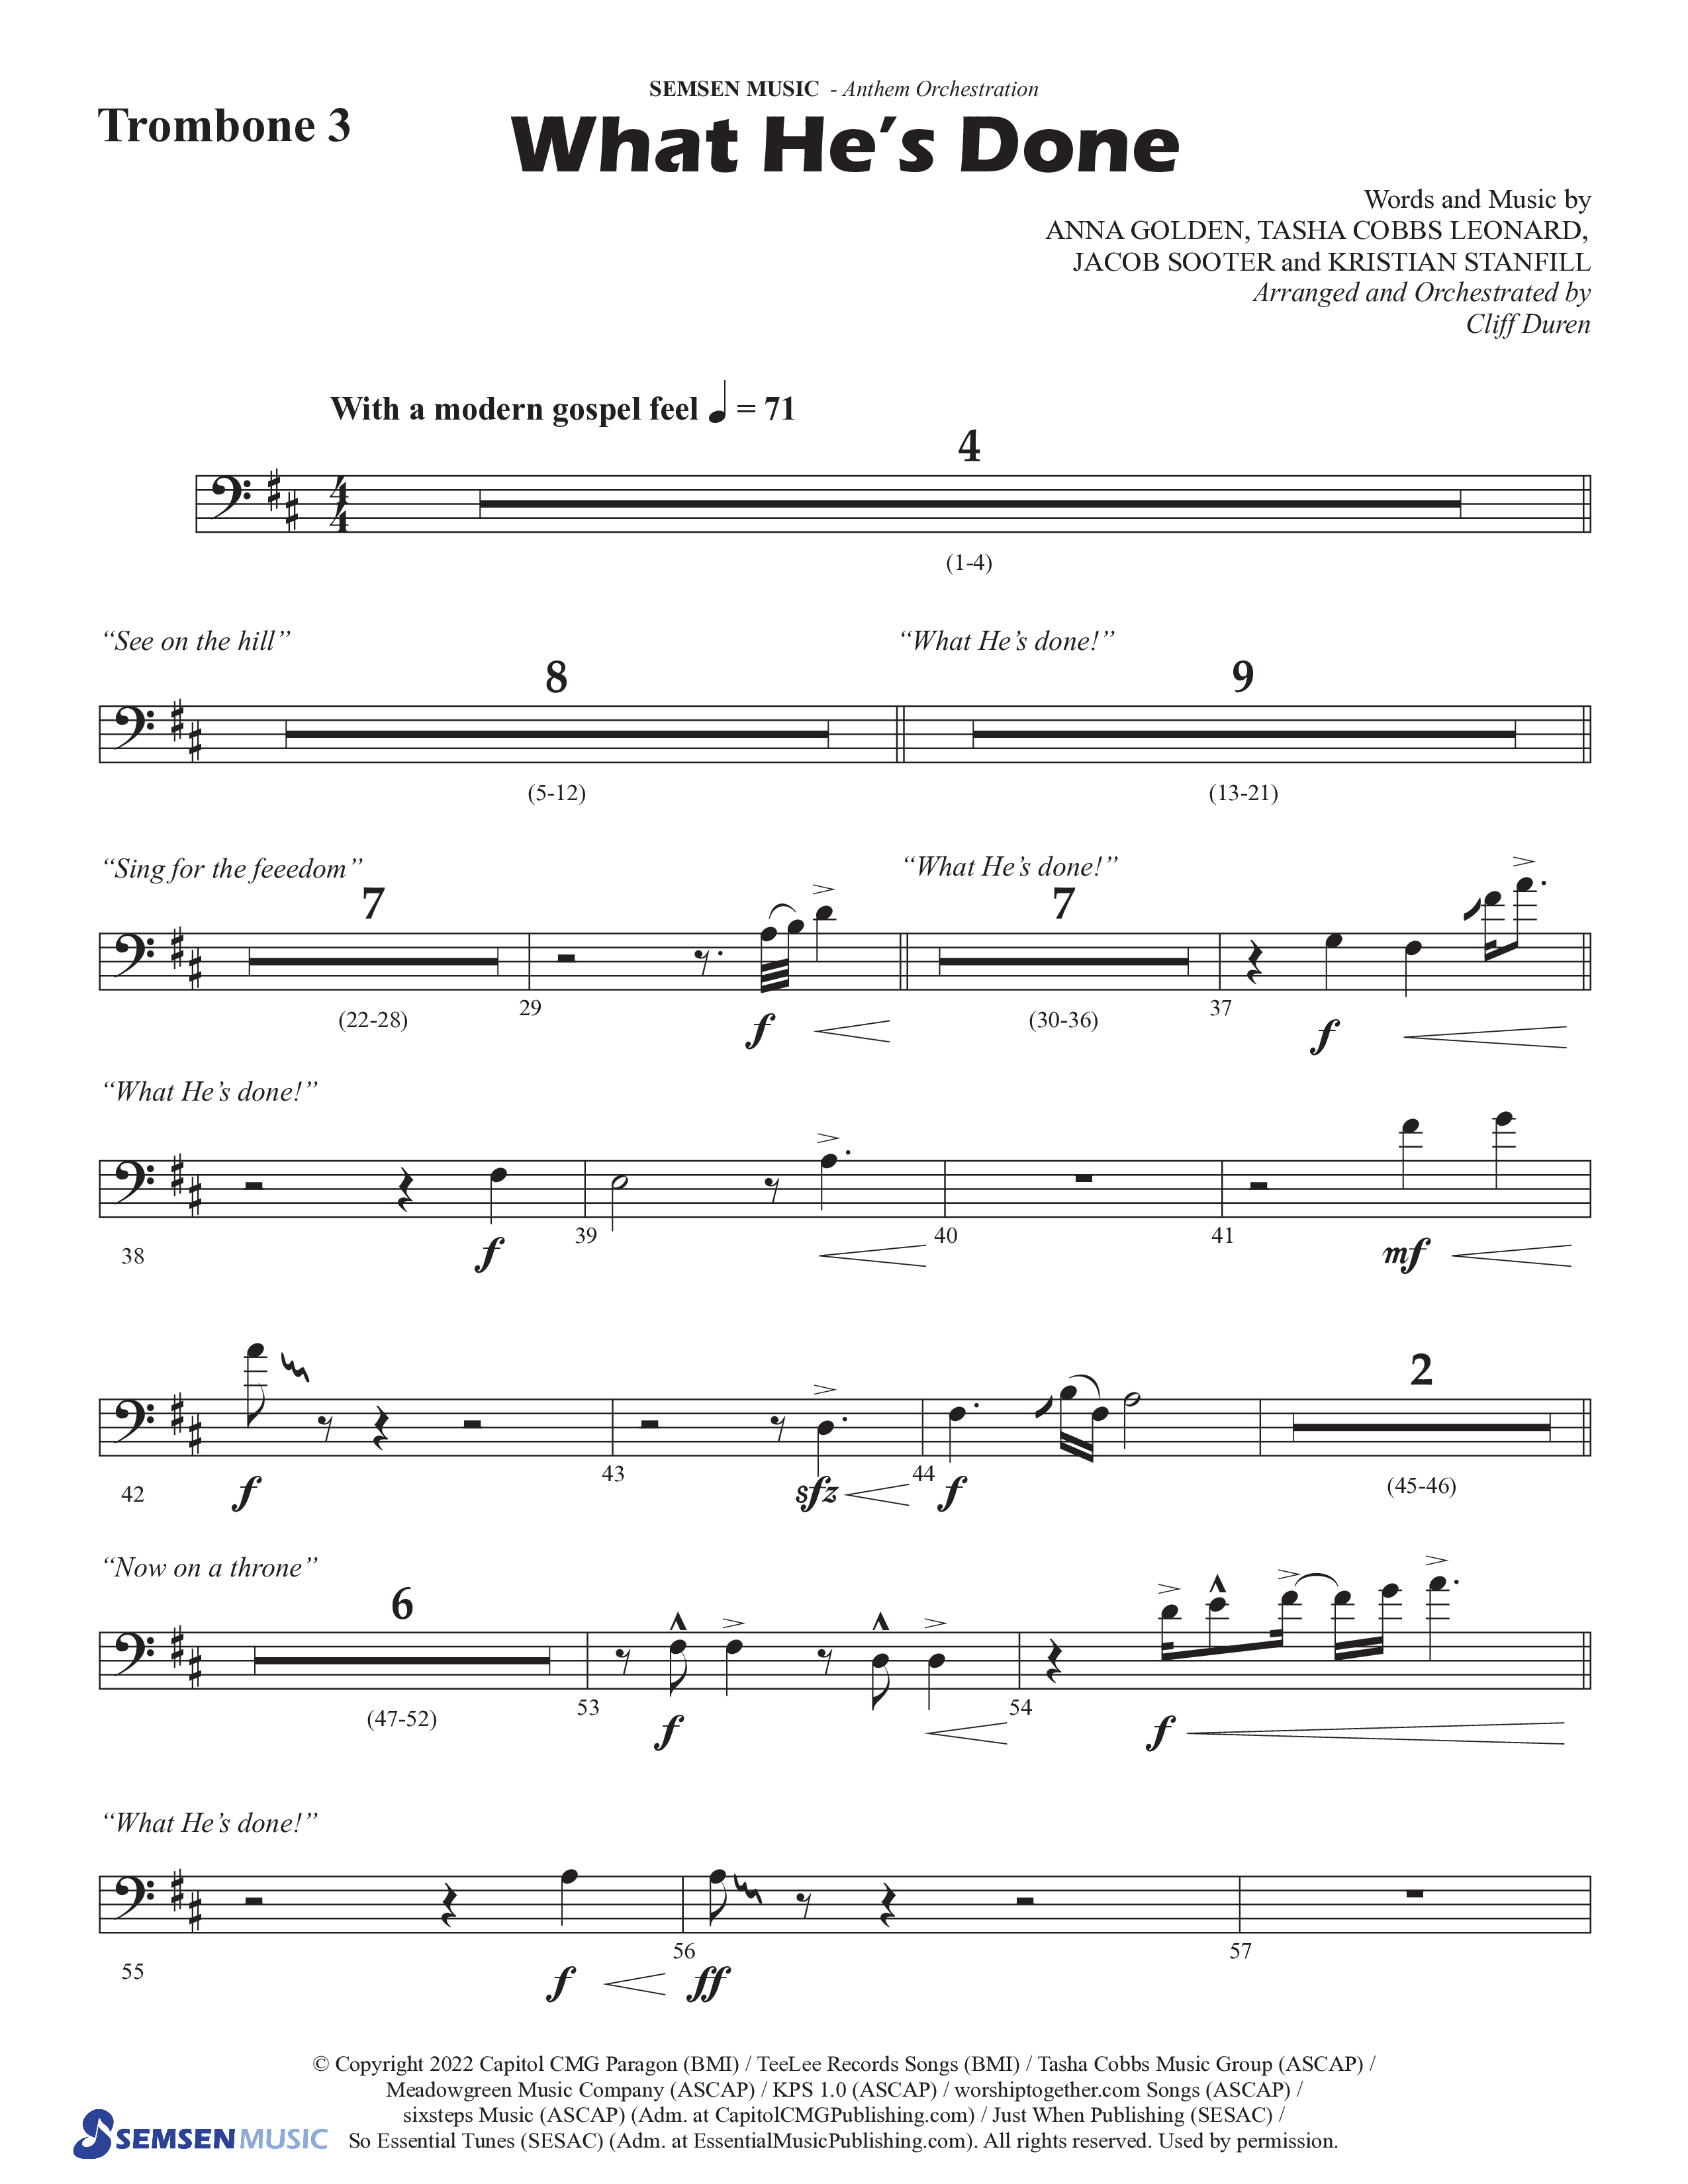 What He's Done (Choral Anthem SATB) Trombone 3 (Semsen Music / Arr. Cliff Duren)